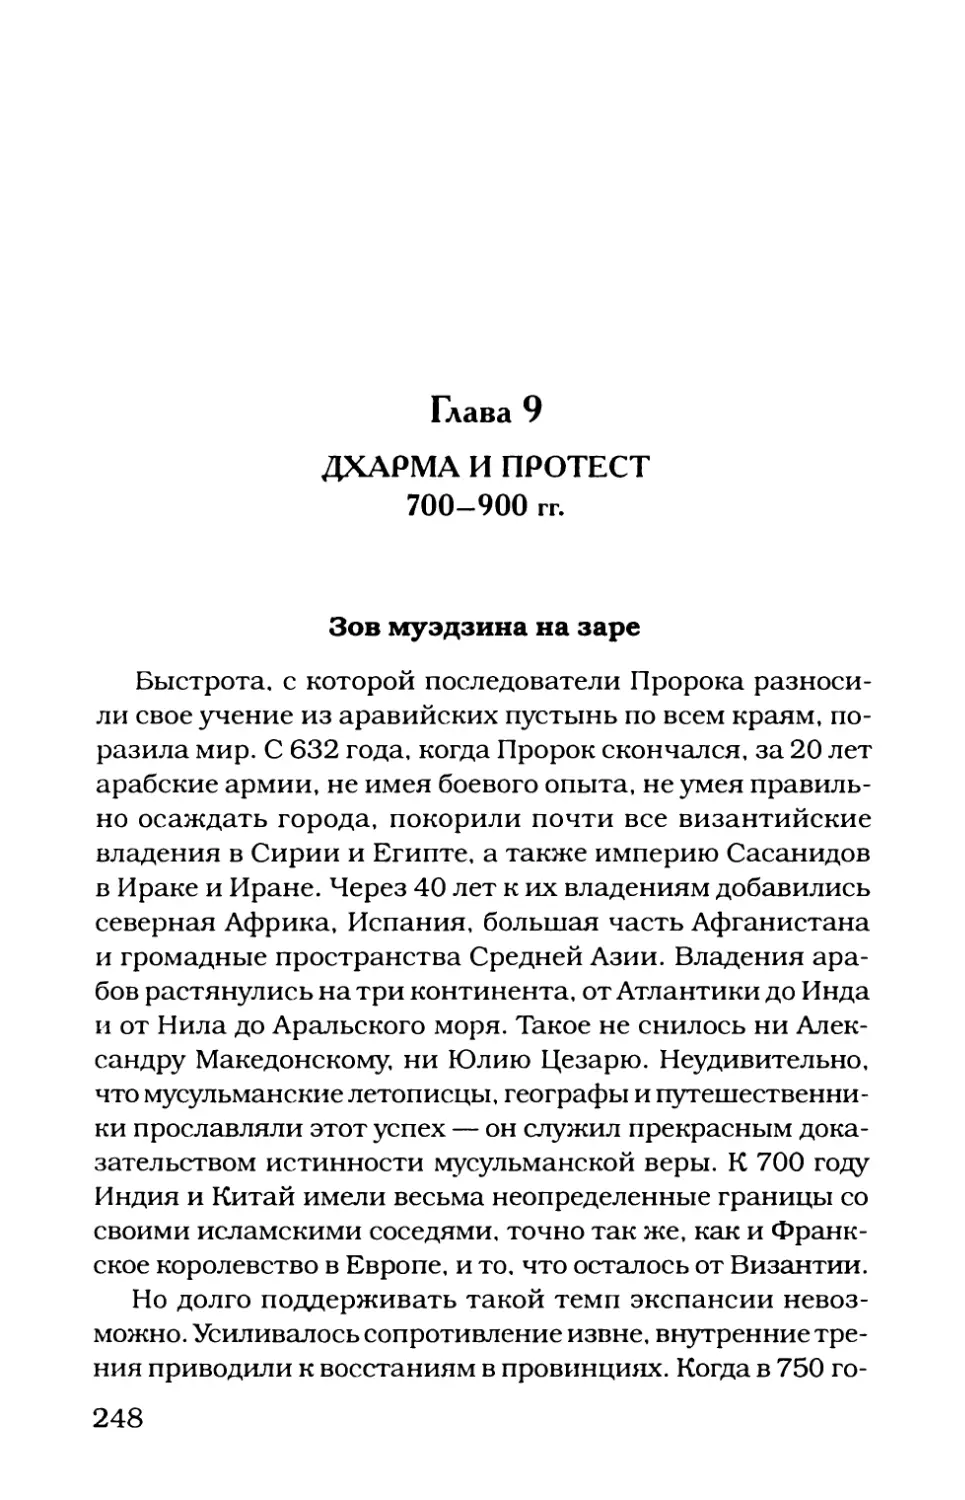 Глава 9. ДХАРМА И ПРОТЕСТ 700-900 гг.